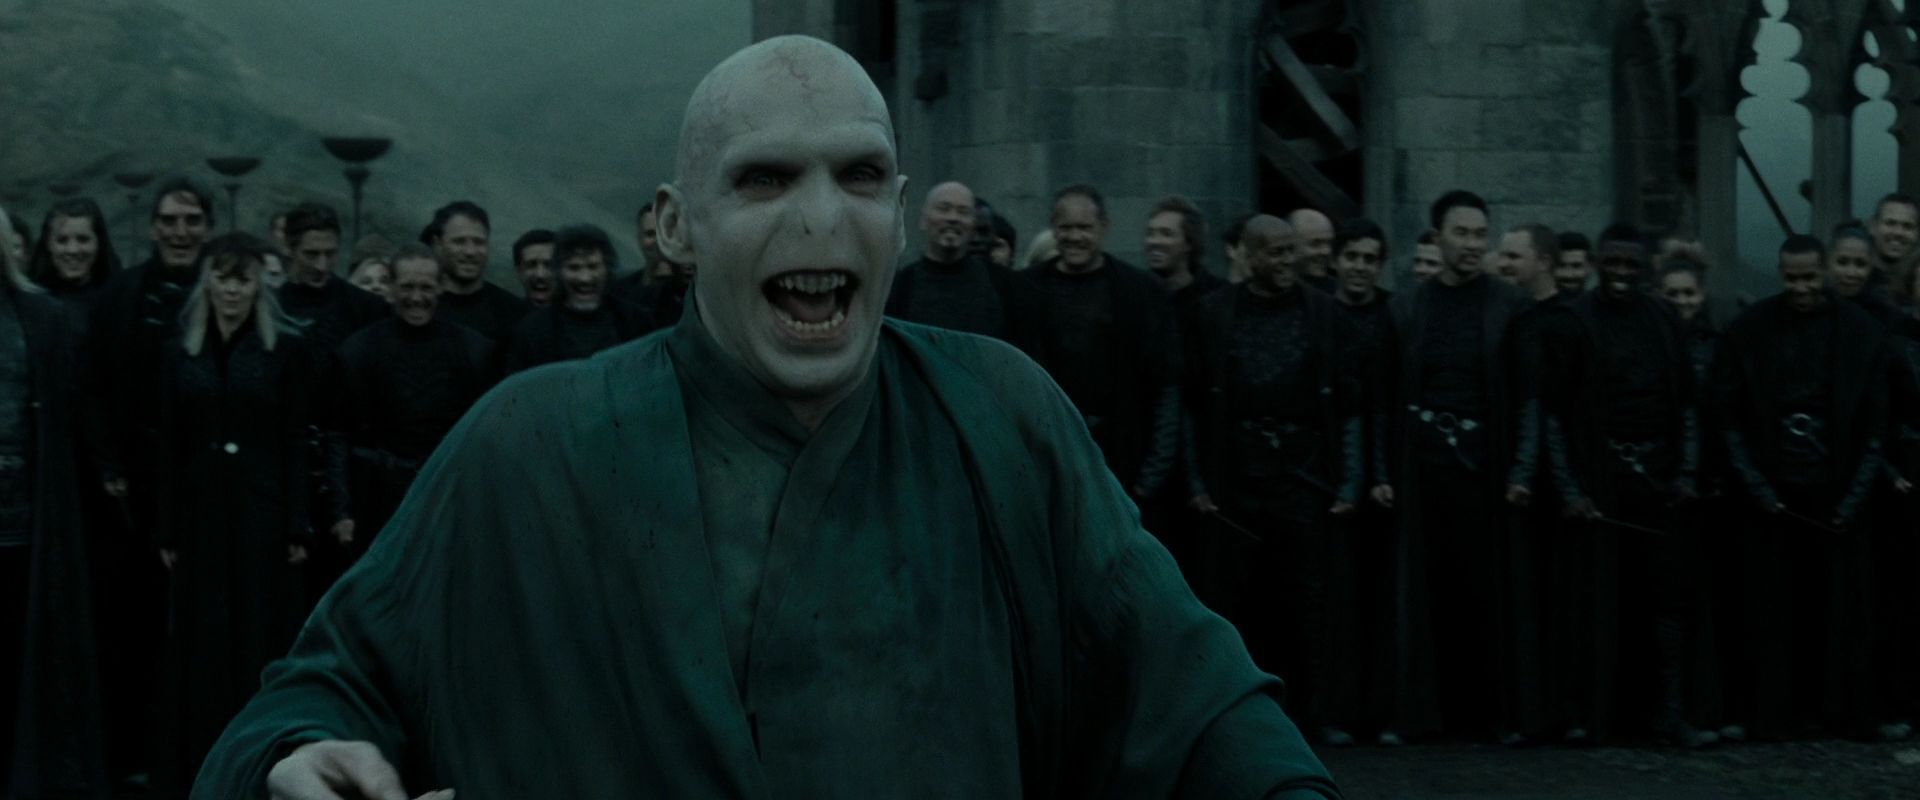 Voldemort laugh lol